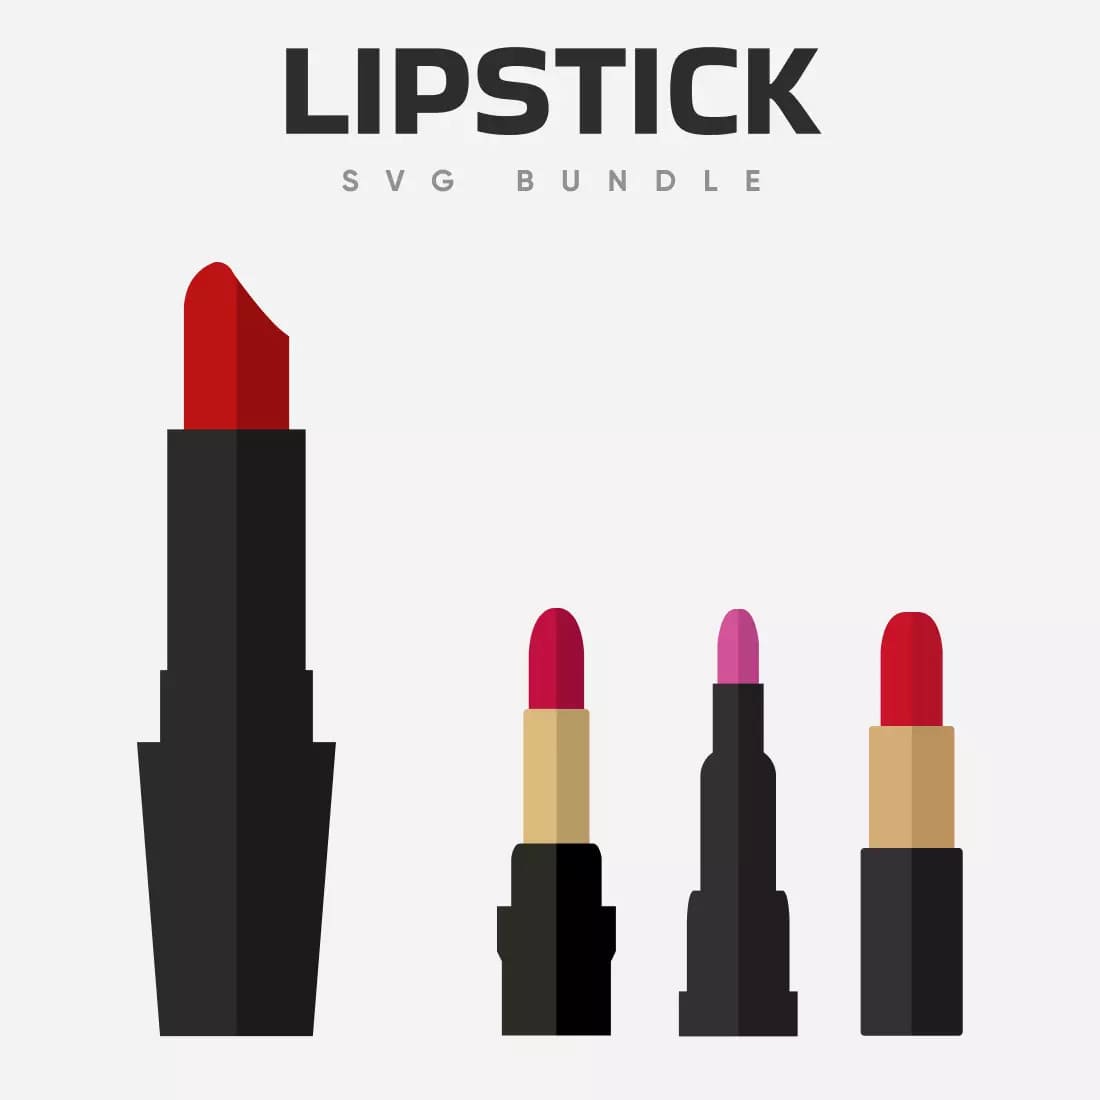 Lipstick SVG Bundle Preview 1.